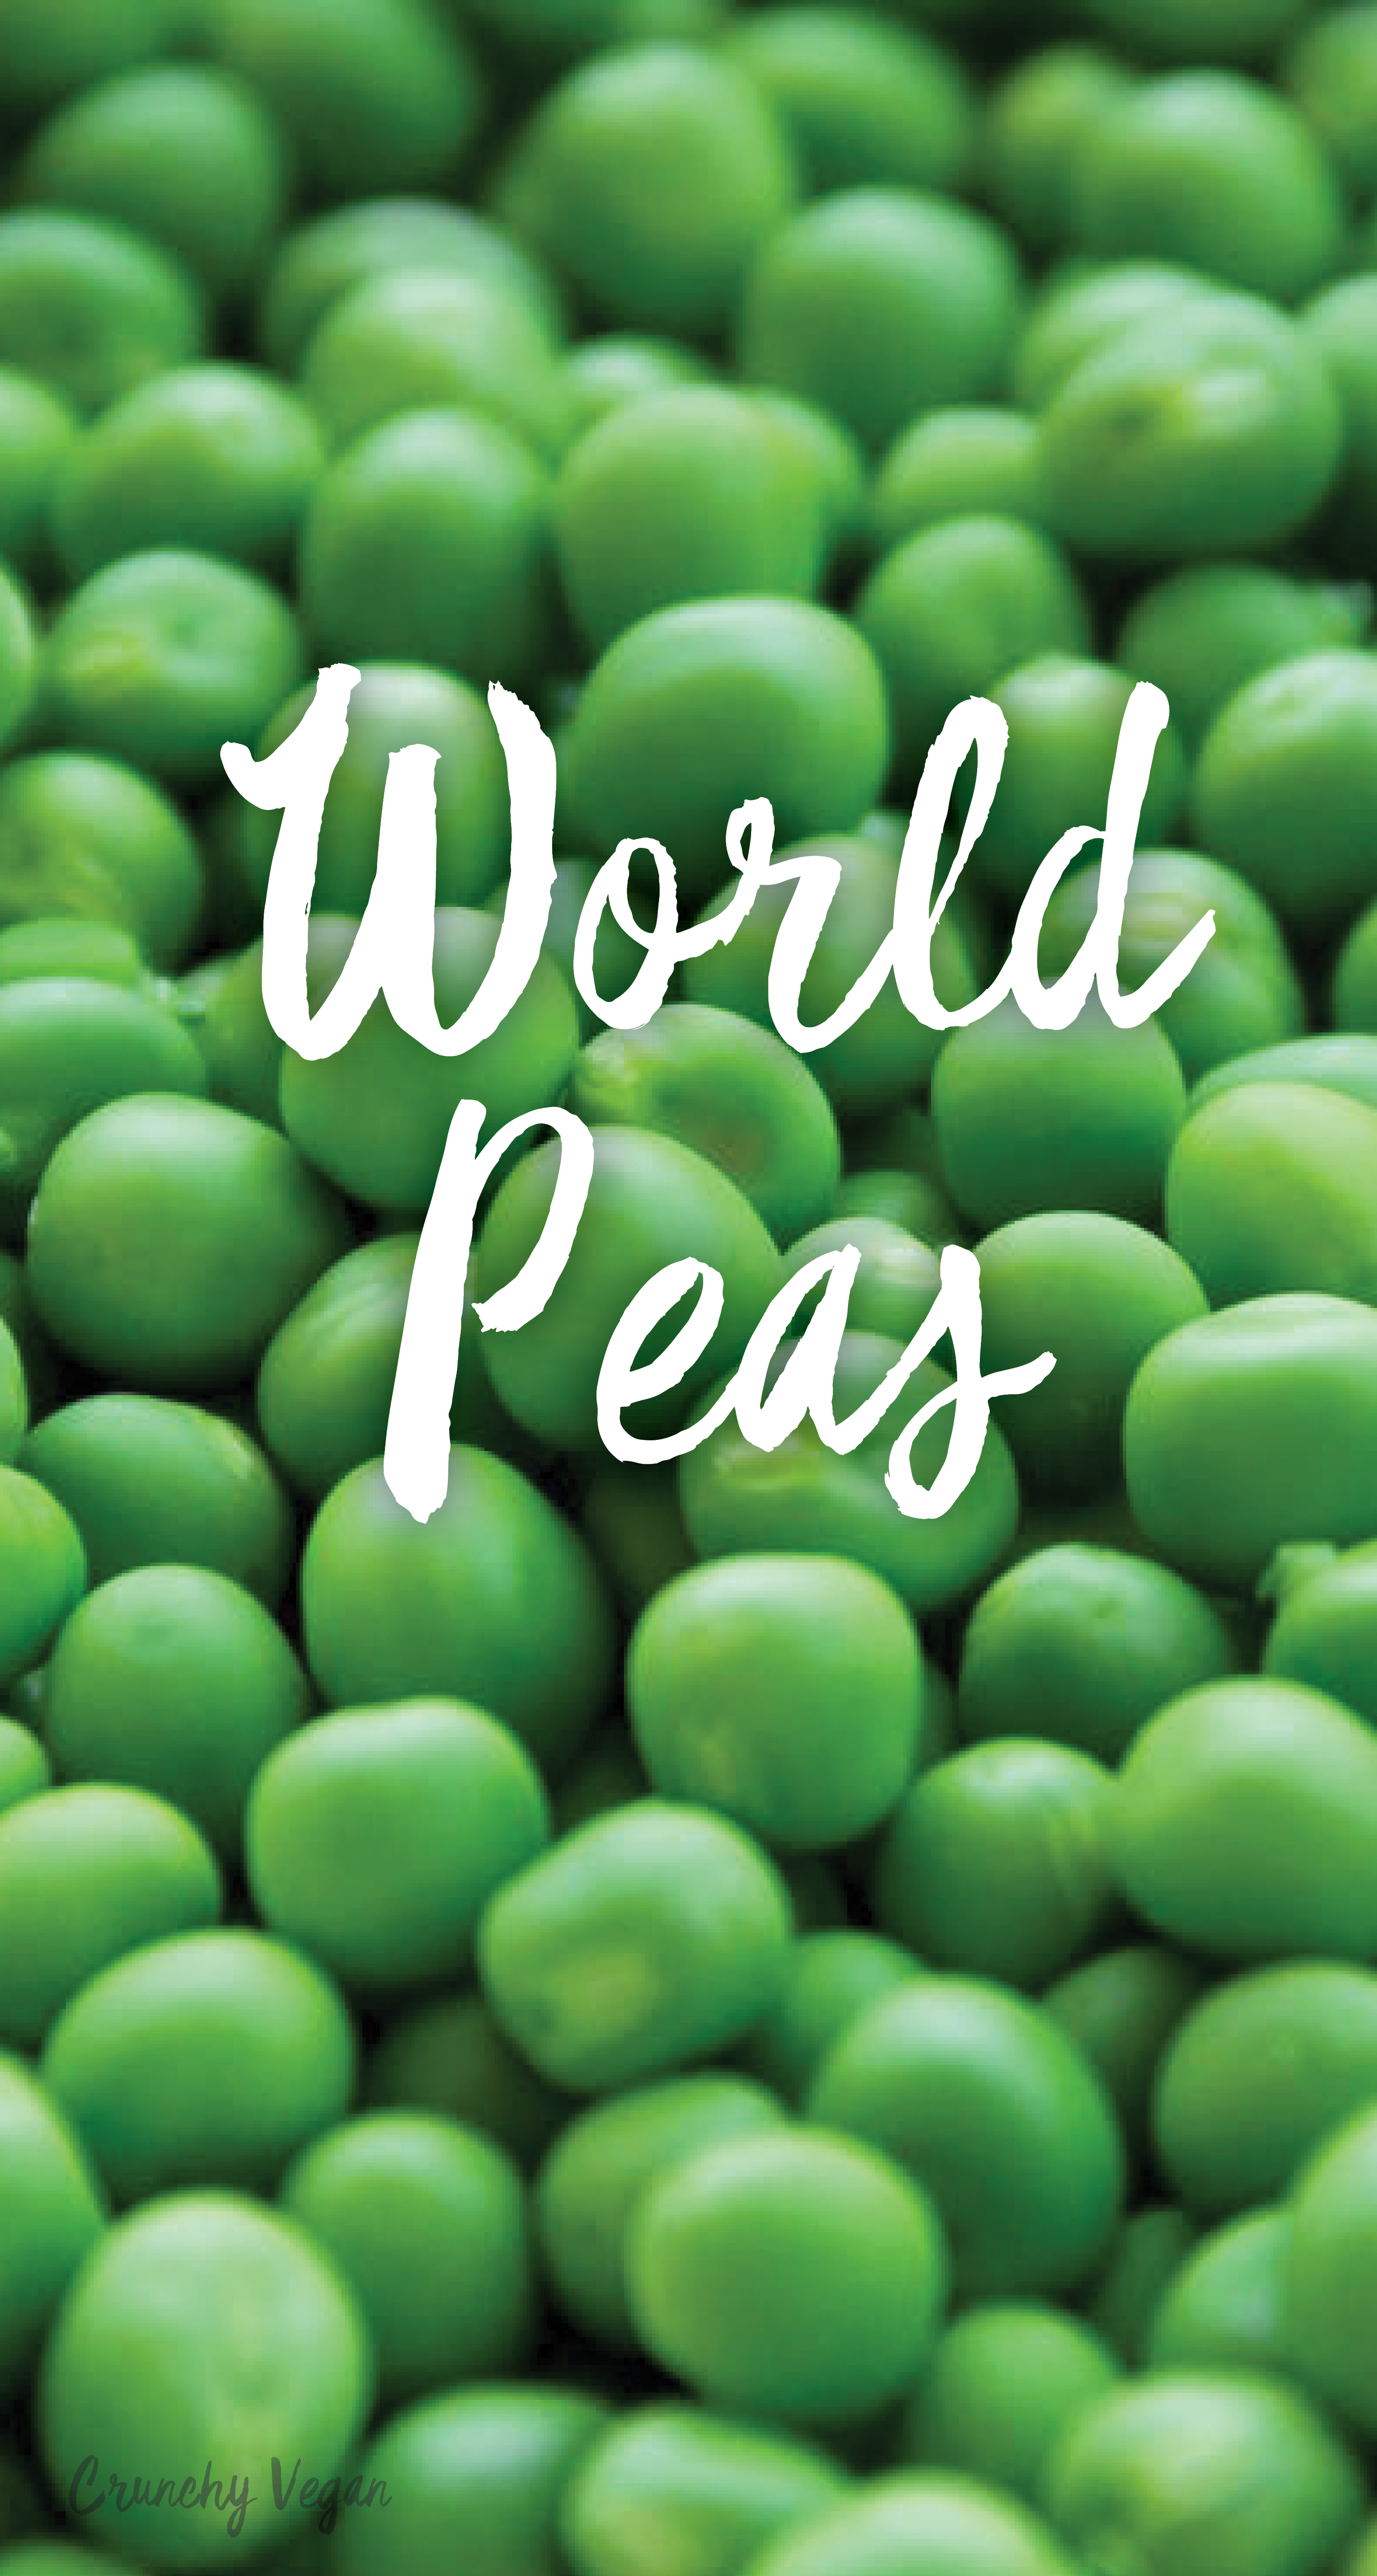 world peas phone wallpaper vegan